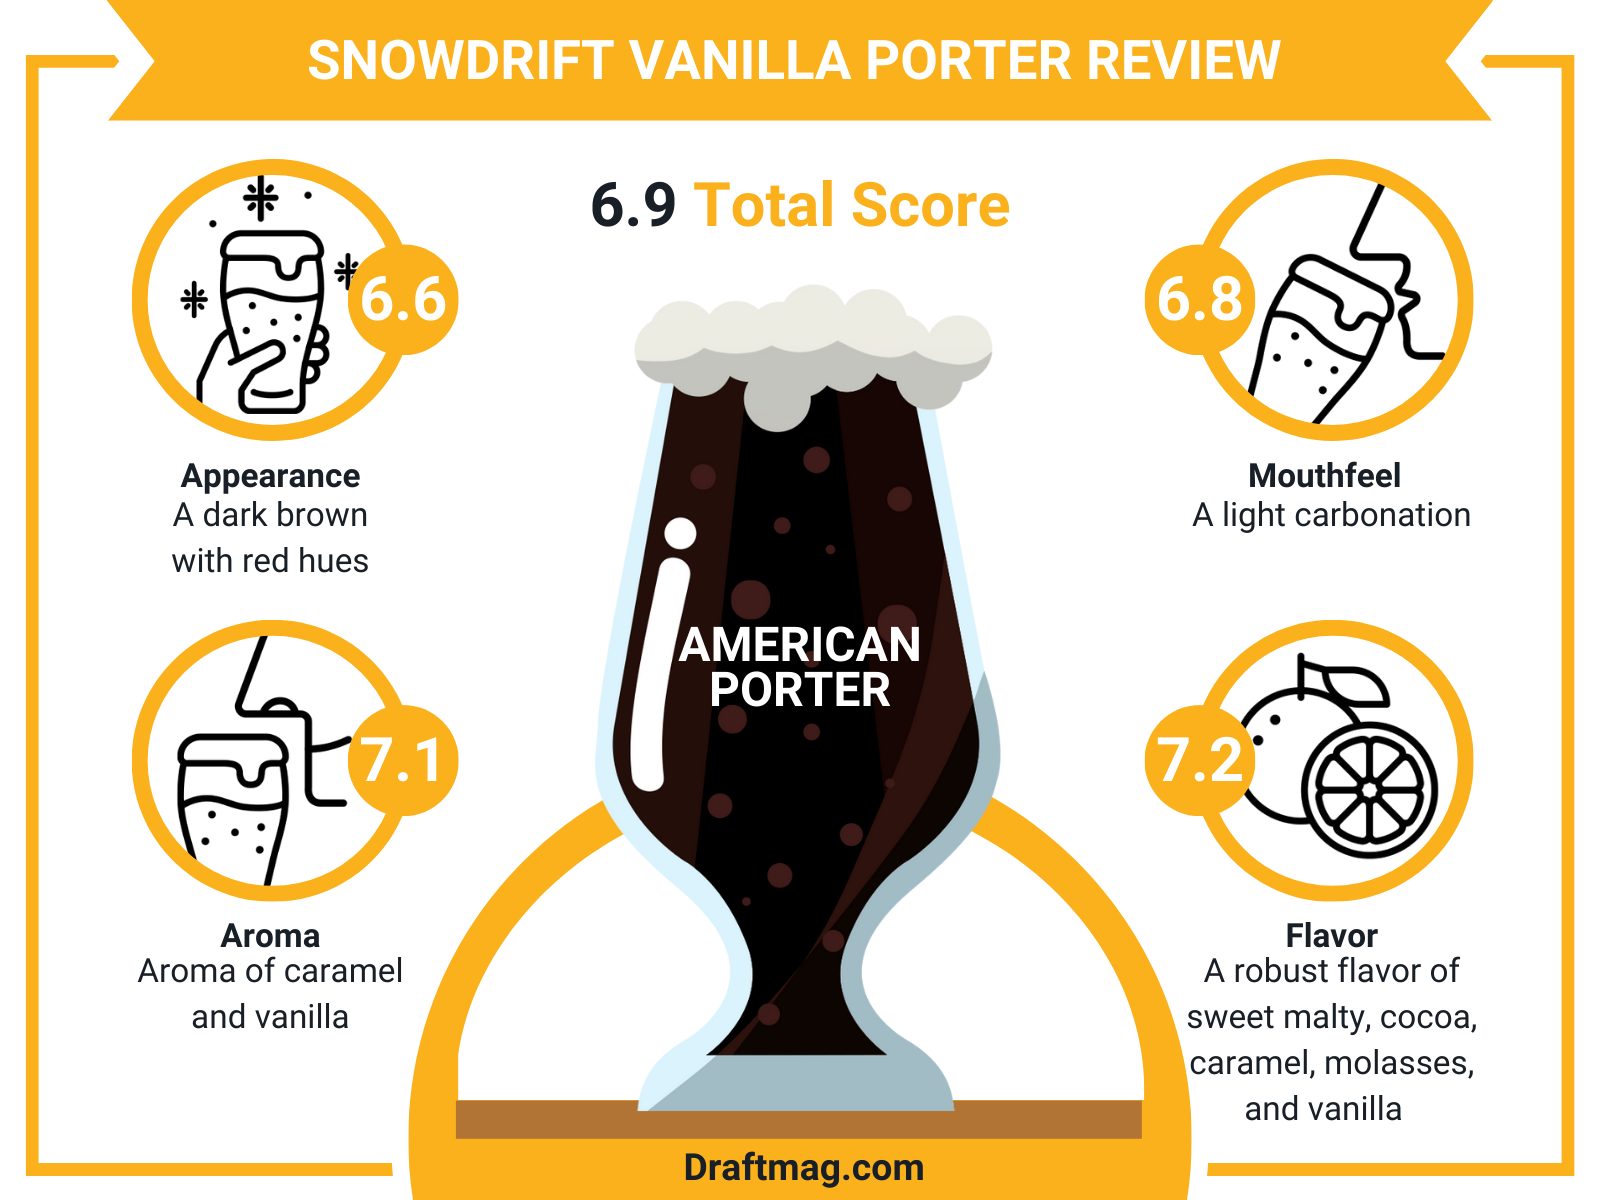 Snowdrift Vanilla Porter Review Infographic